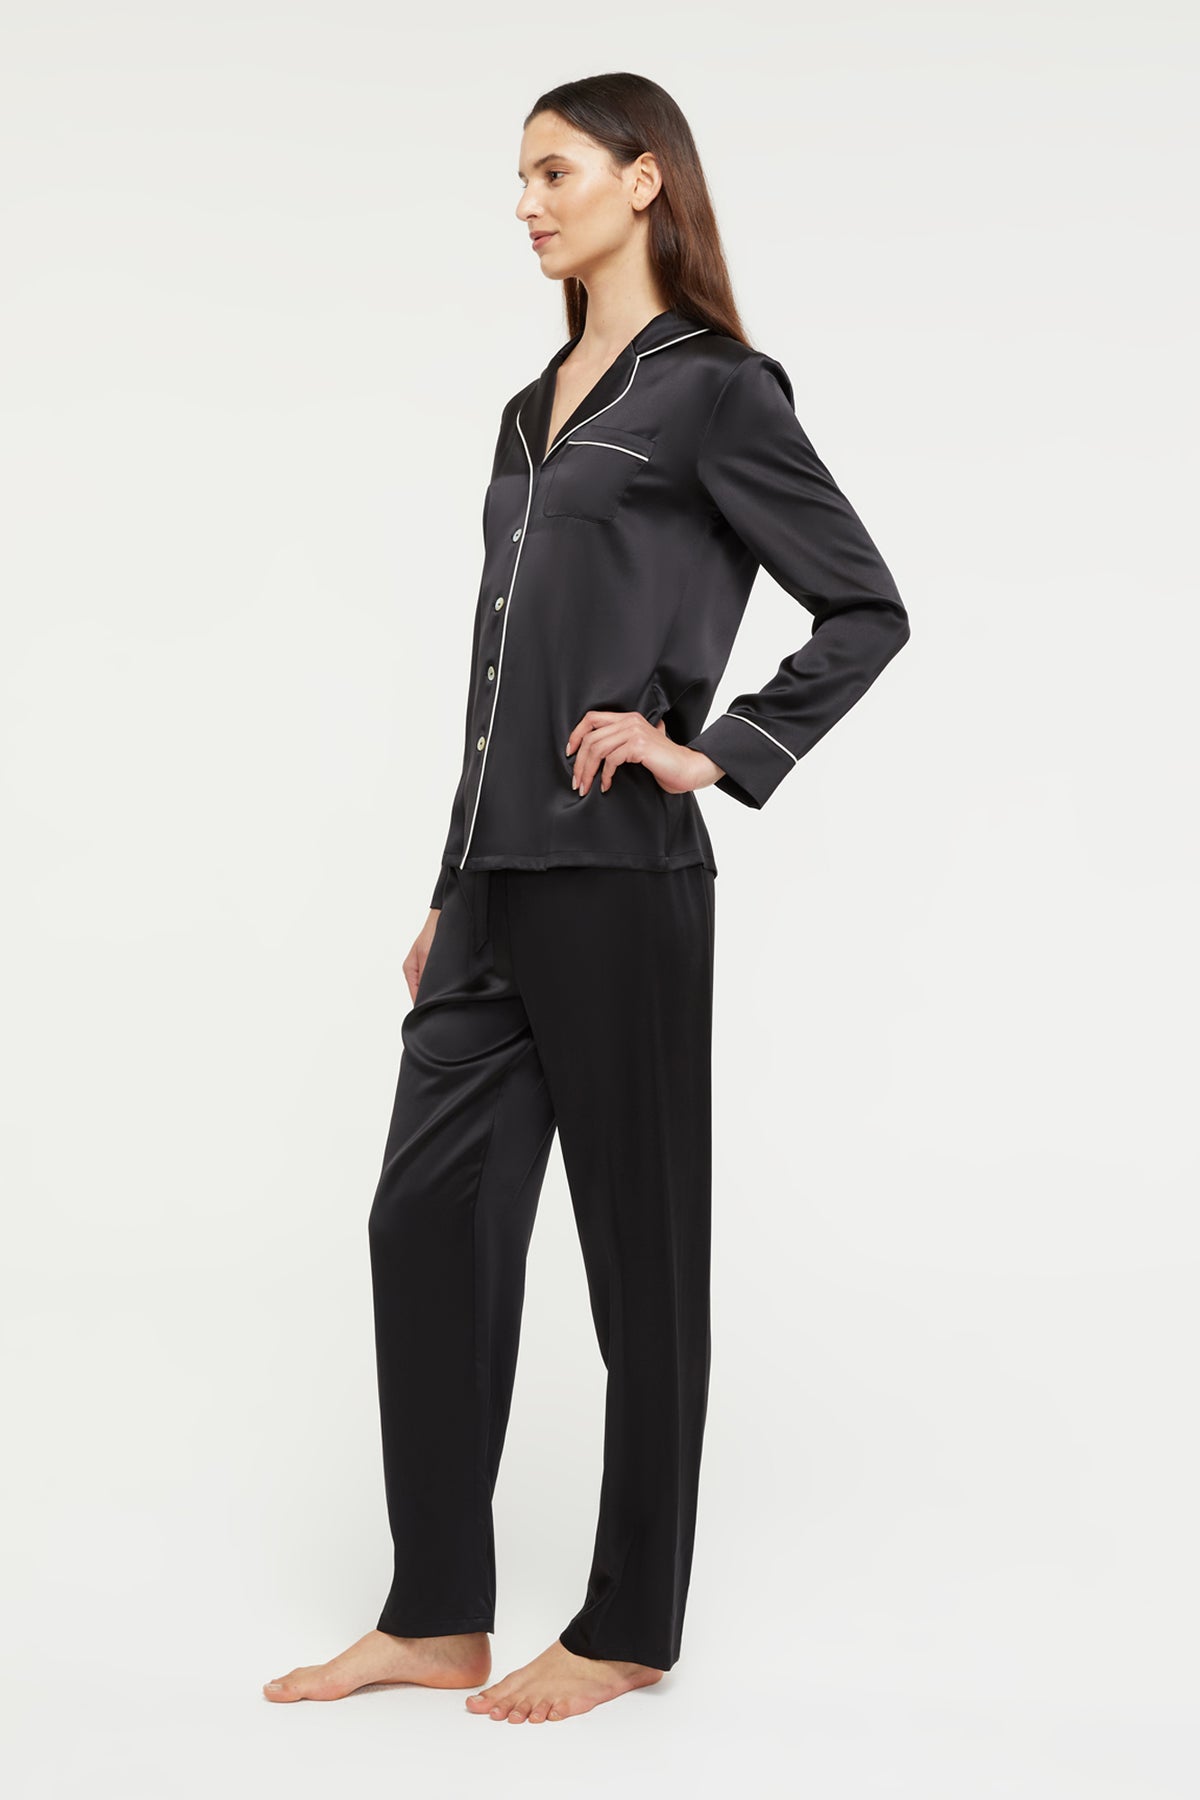 GINIA Fine Finishes Pyjama in Black/Creme Piping - 100% 19mm Silk Grade 6A